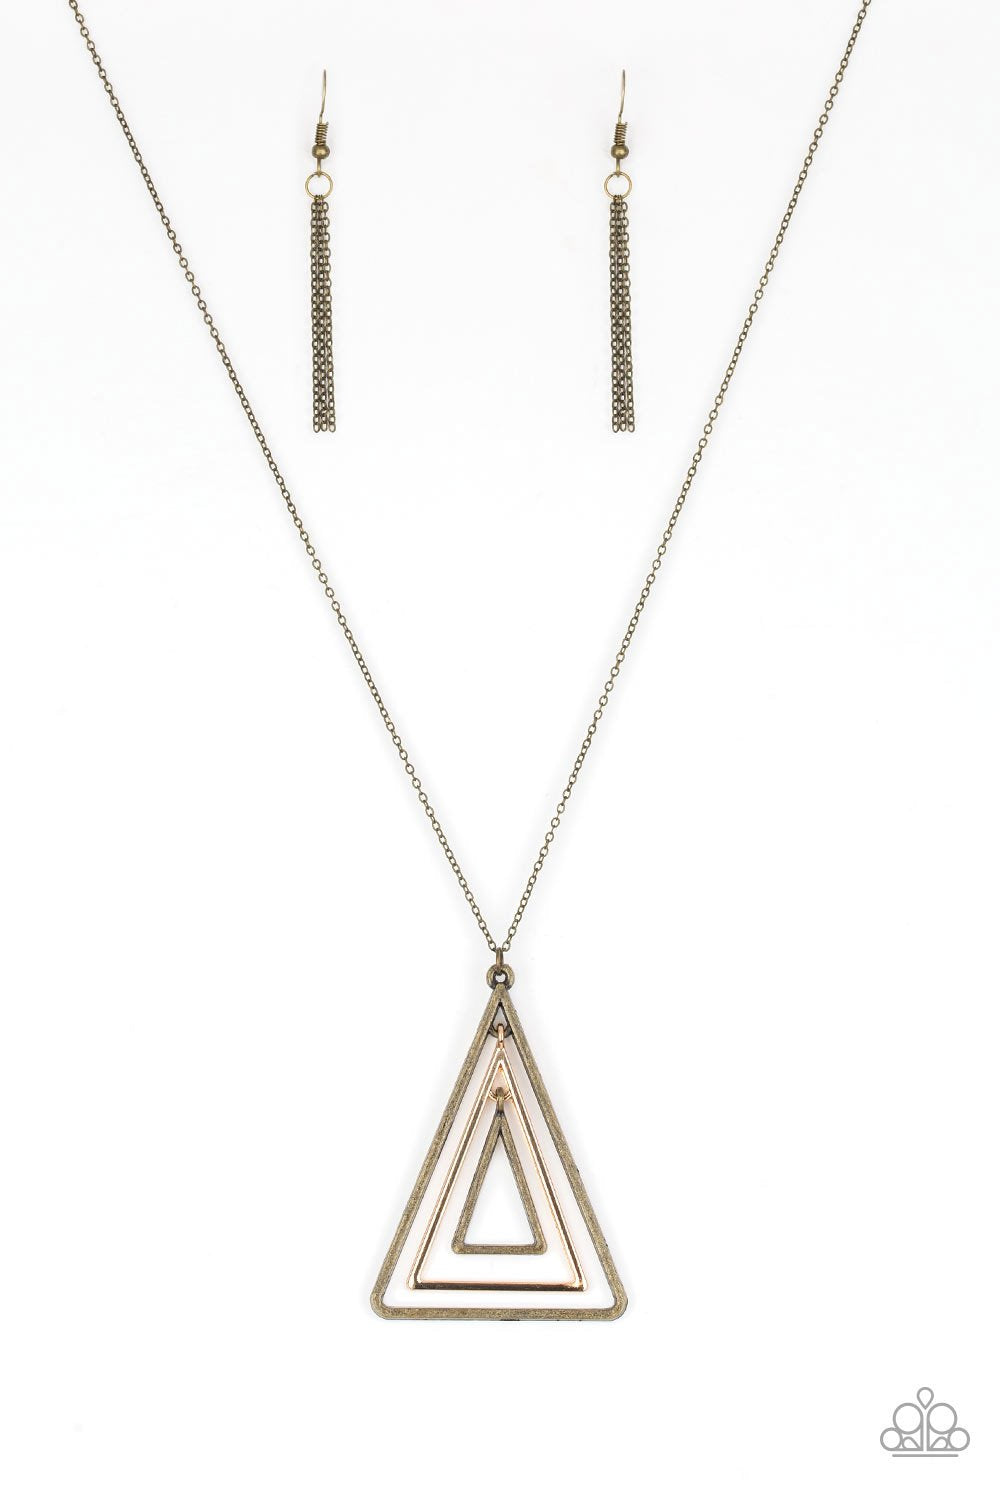 TRI Harder - Brass Necklace freeshipping - JewLz4u Gemstone Gallery